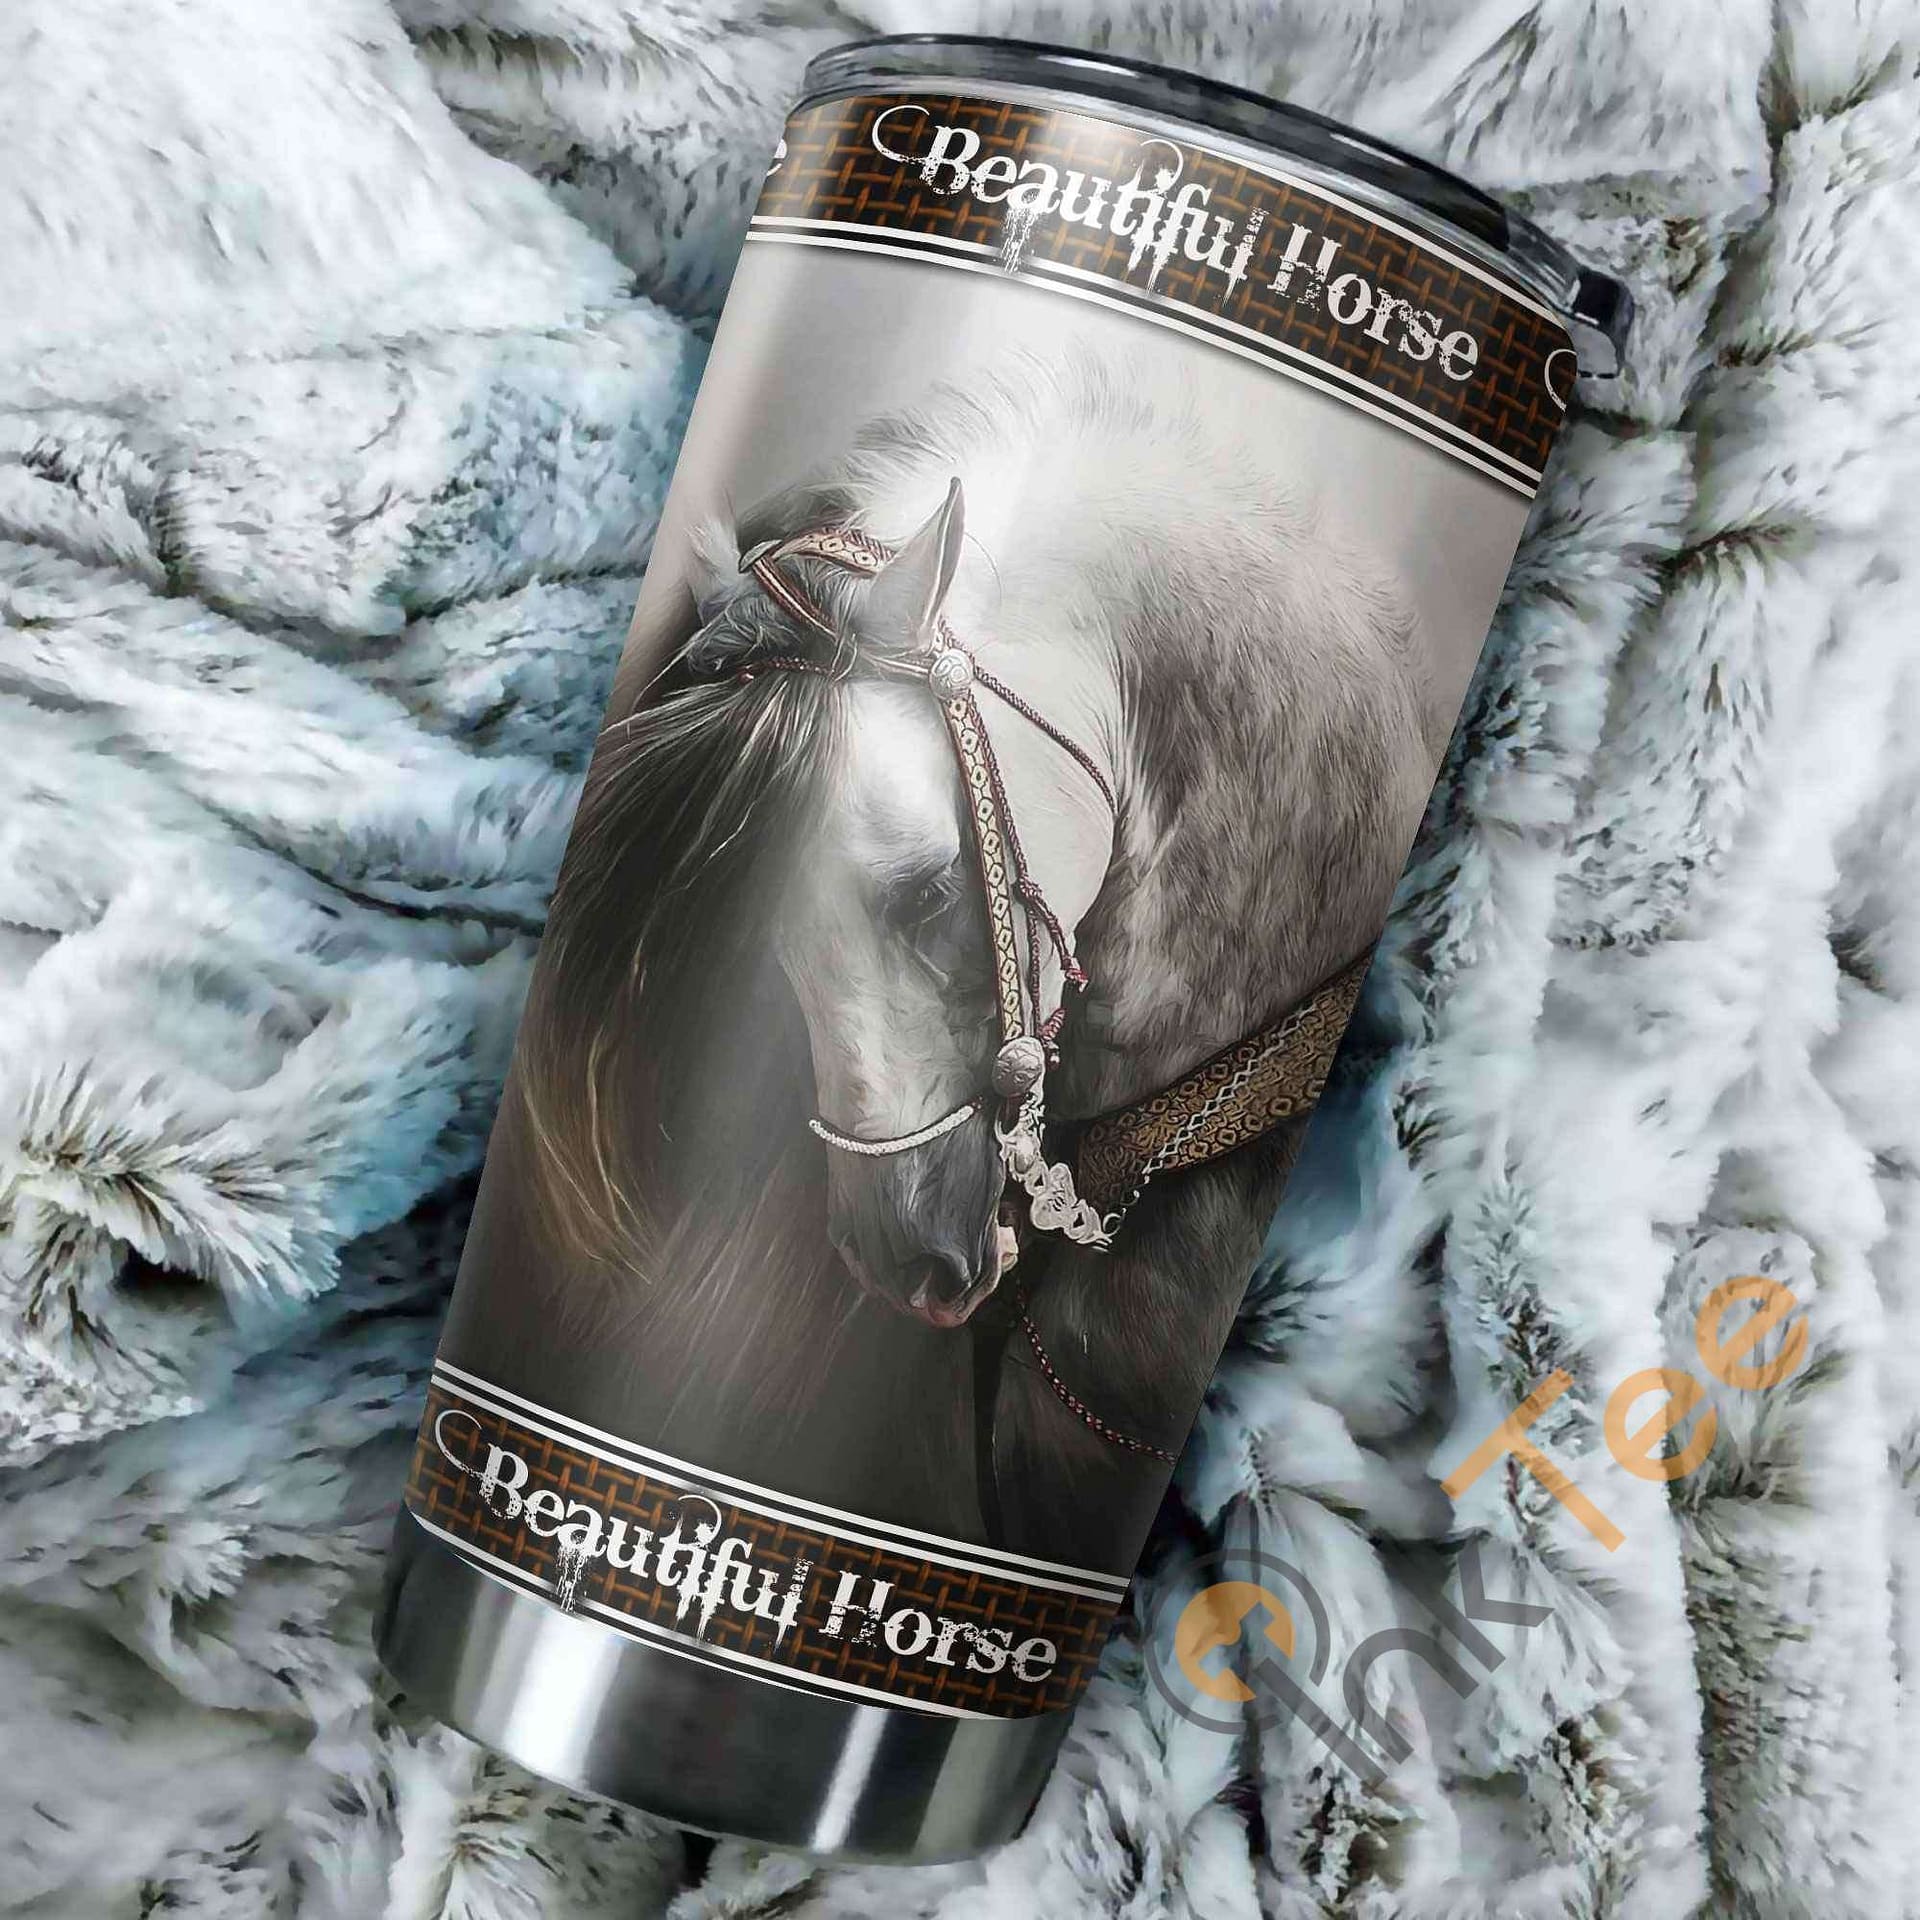 Beautiful Horse Amazon Best Seller Sku 3772 Stainless Steel Tumbler